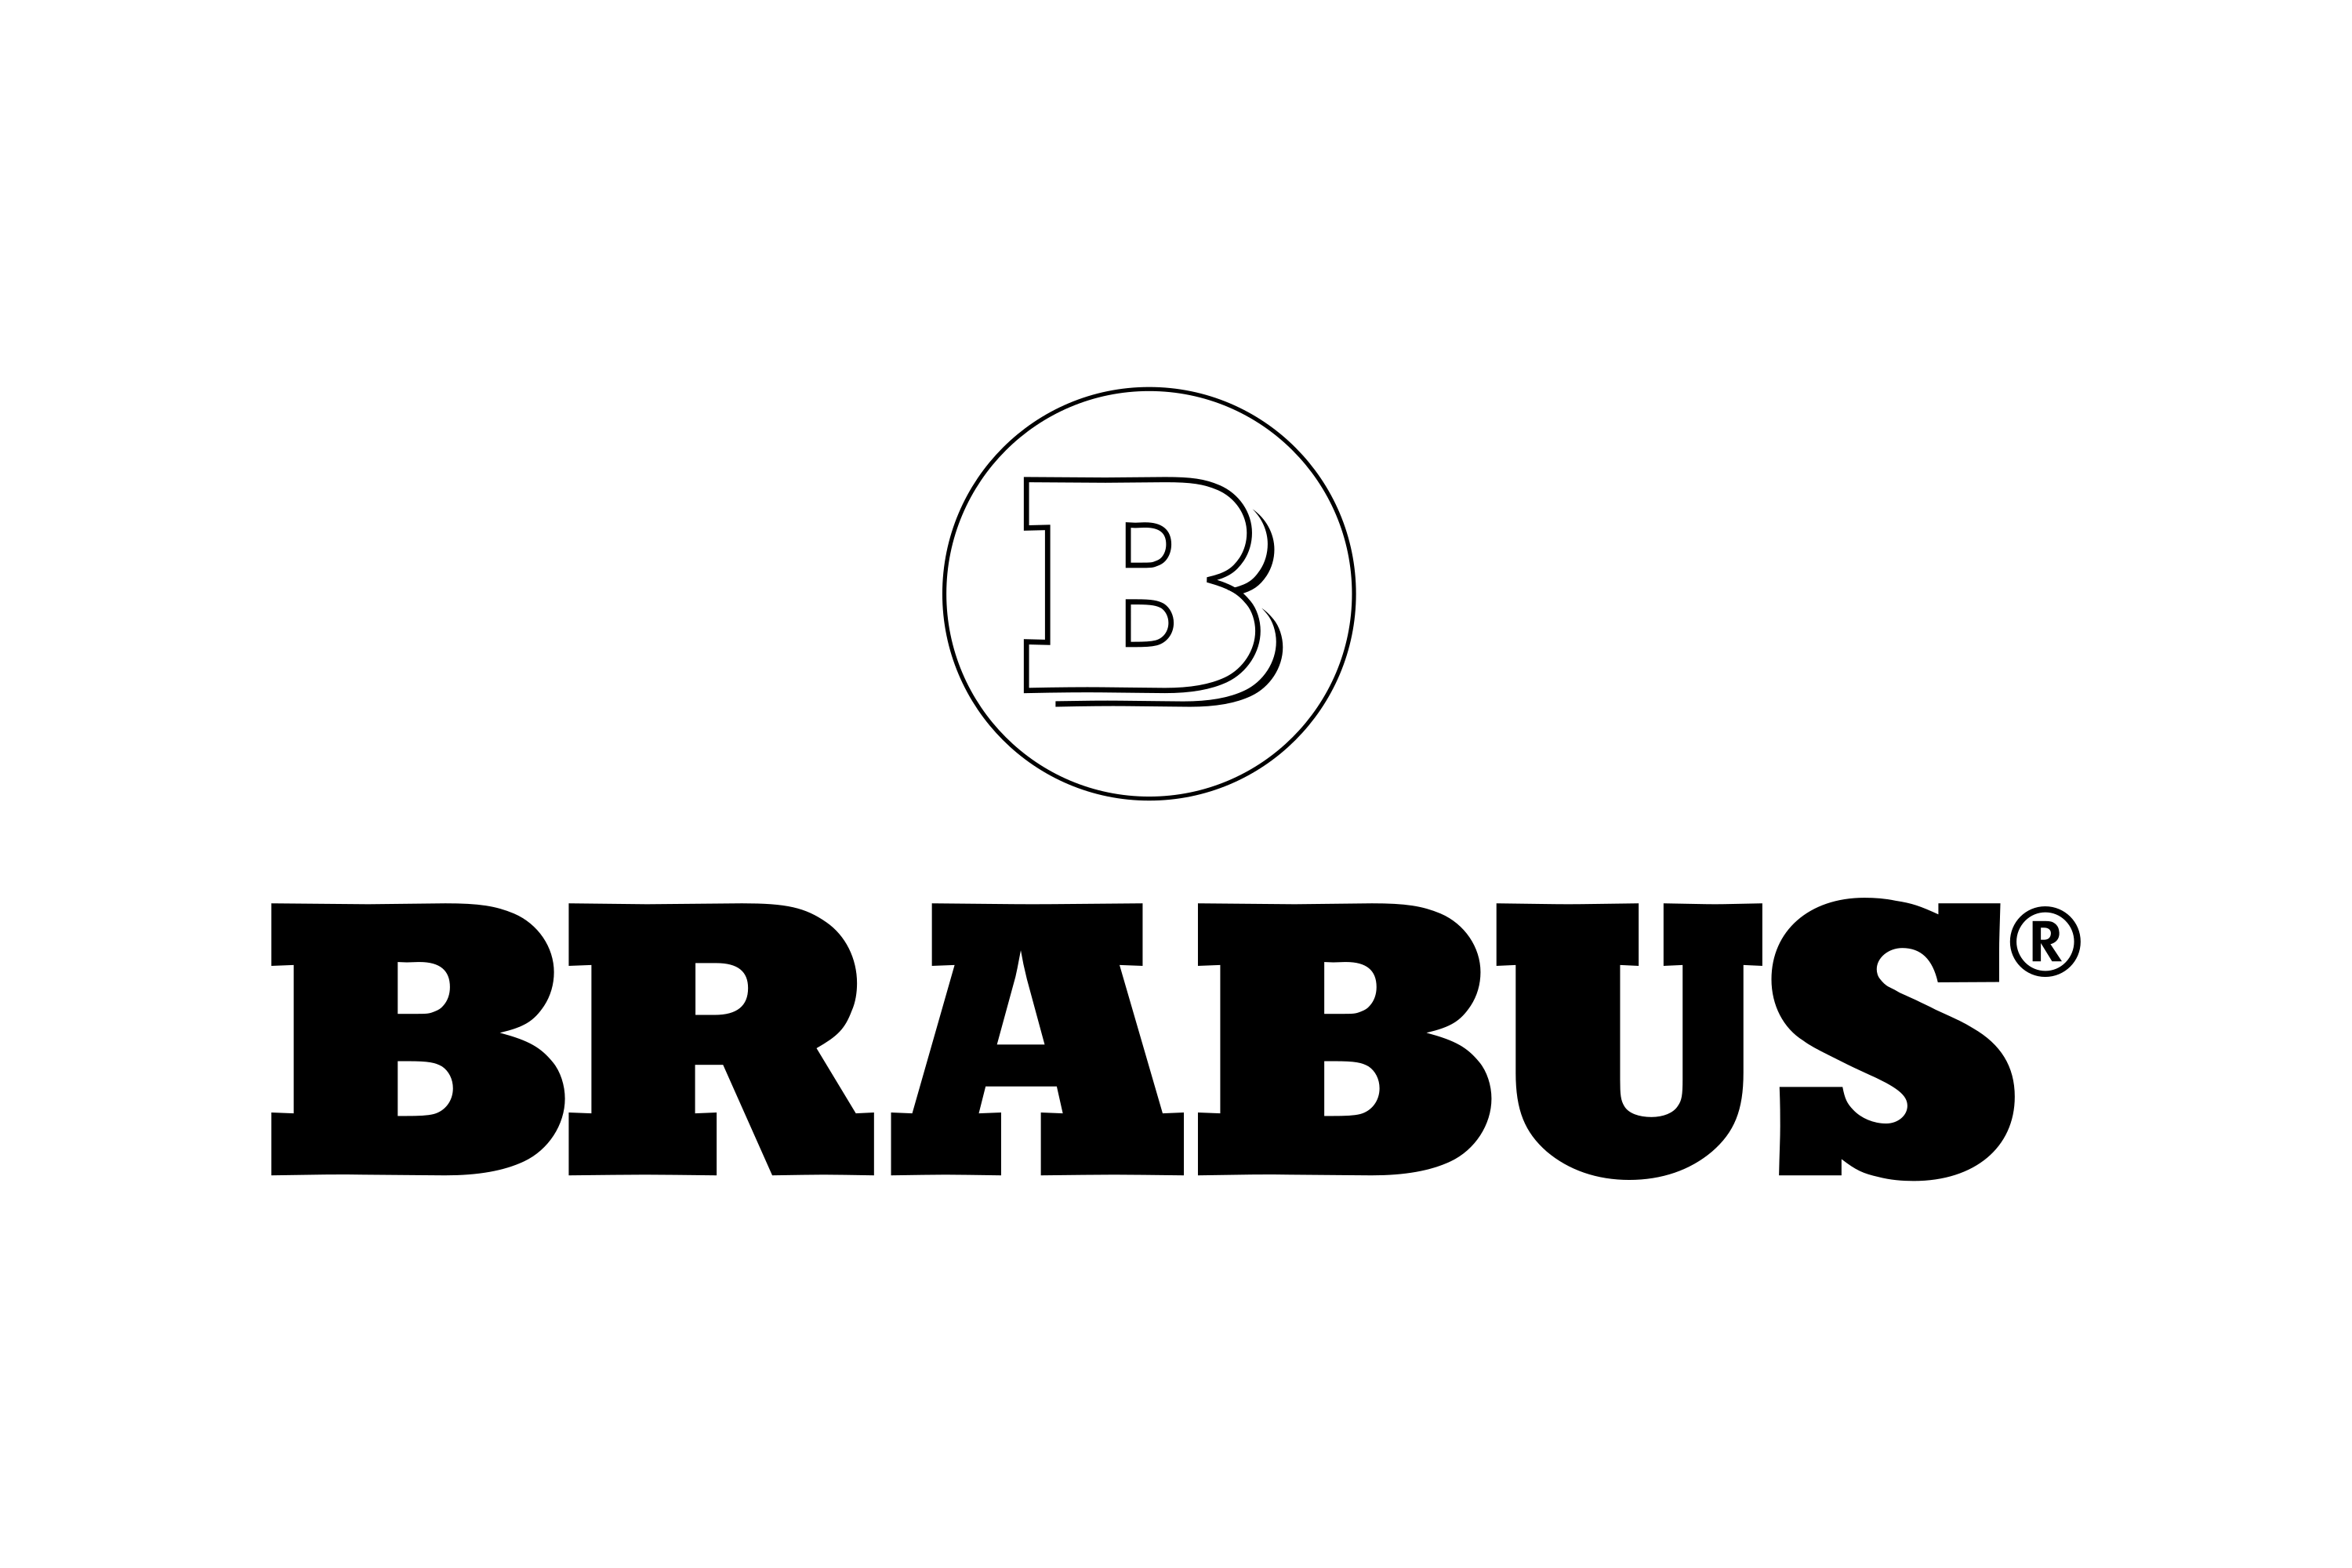 Download Brabus Logo in SVG Vector or PNG File Format - Logo.wine